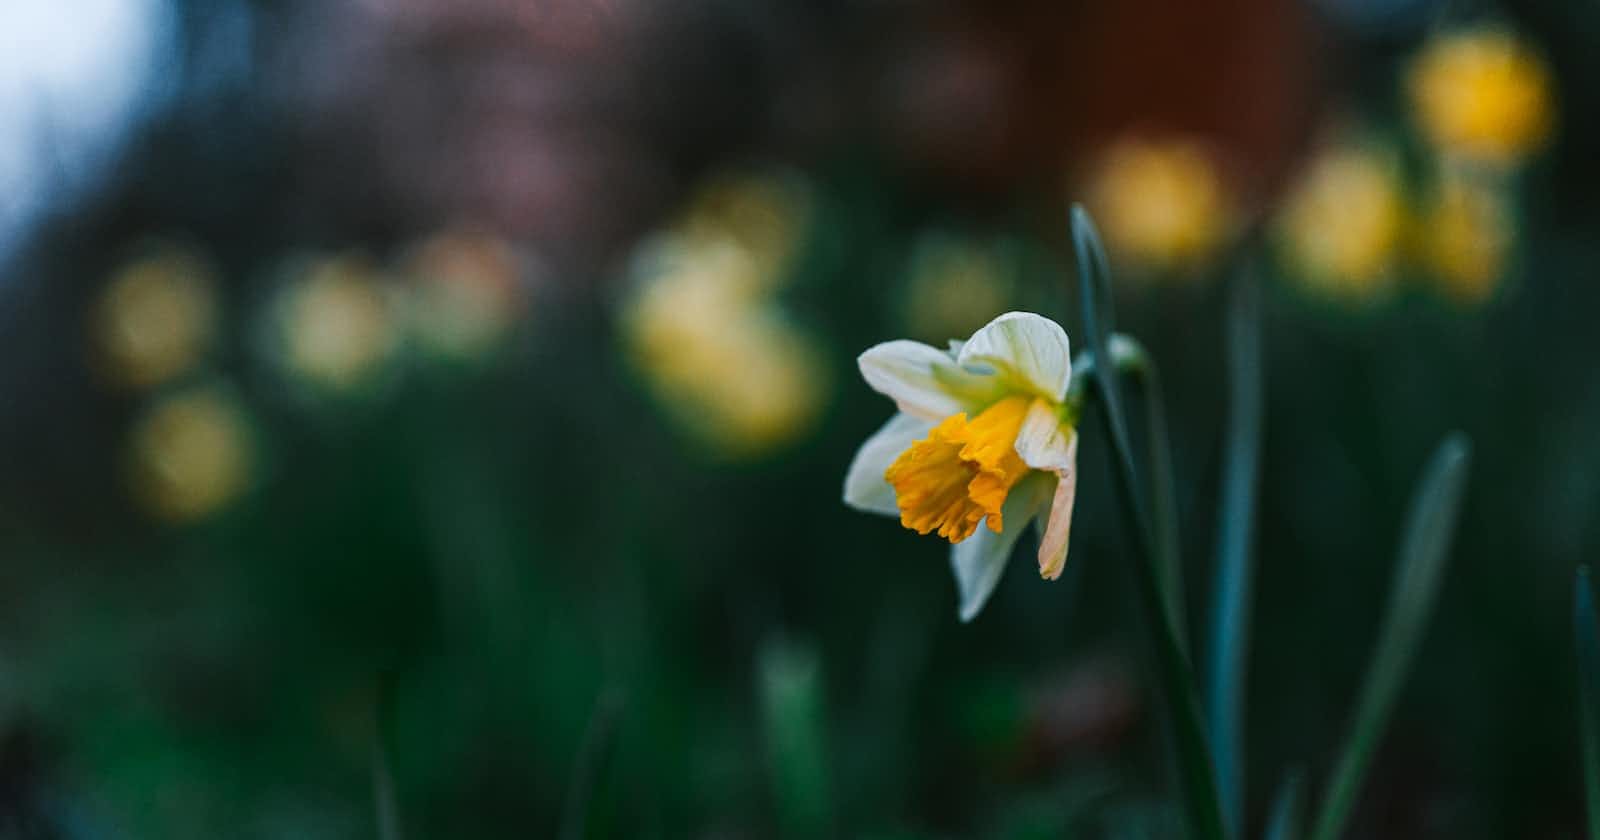 The Daffodils Love